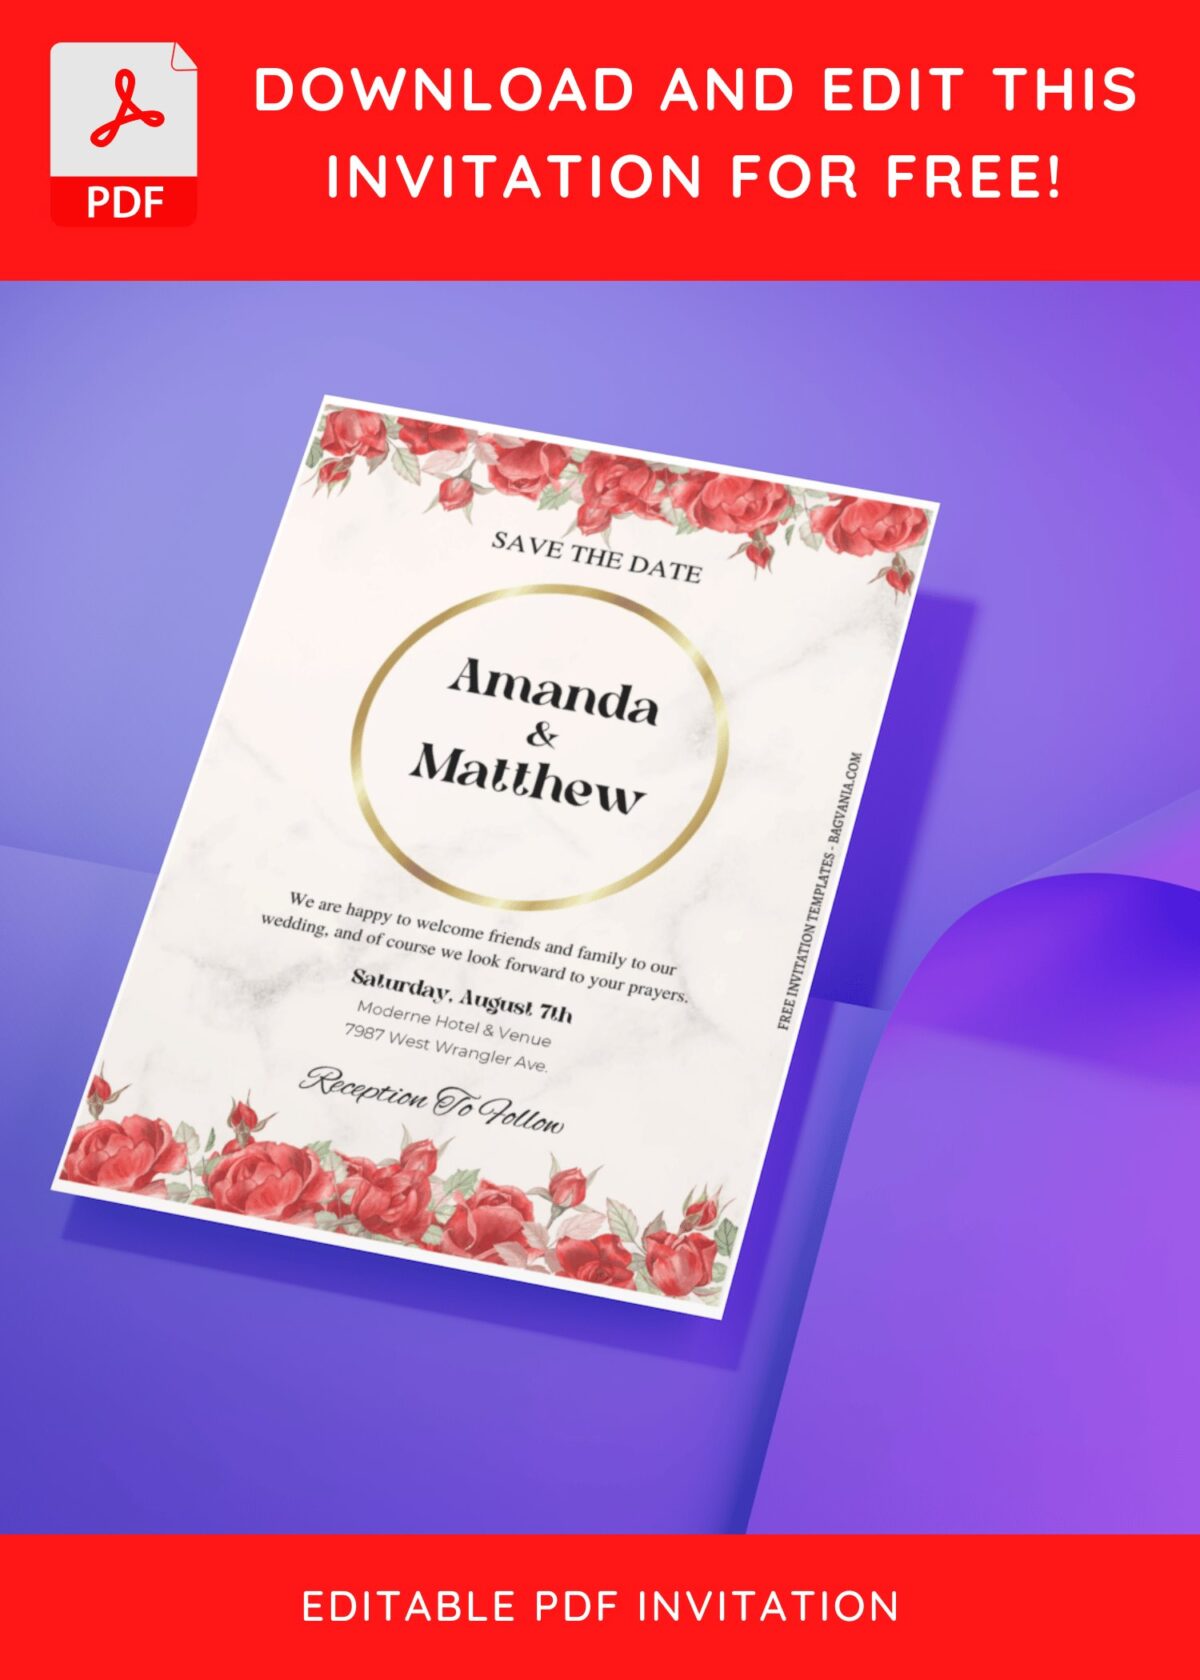 (Free Editable PDF) Whimsical Rosebud Wedding Invitation Templates J